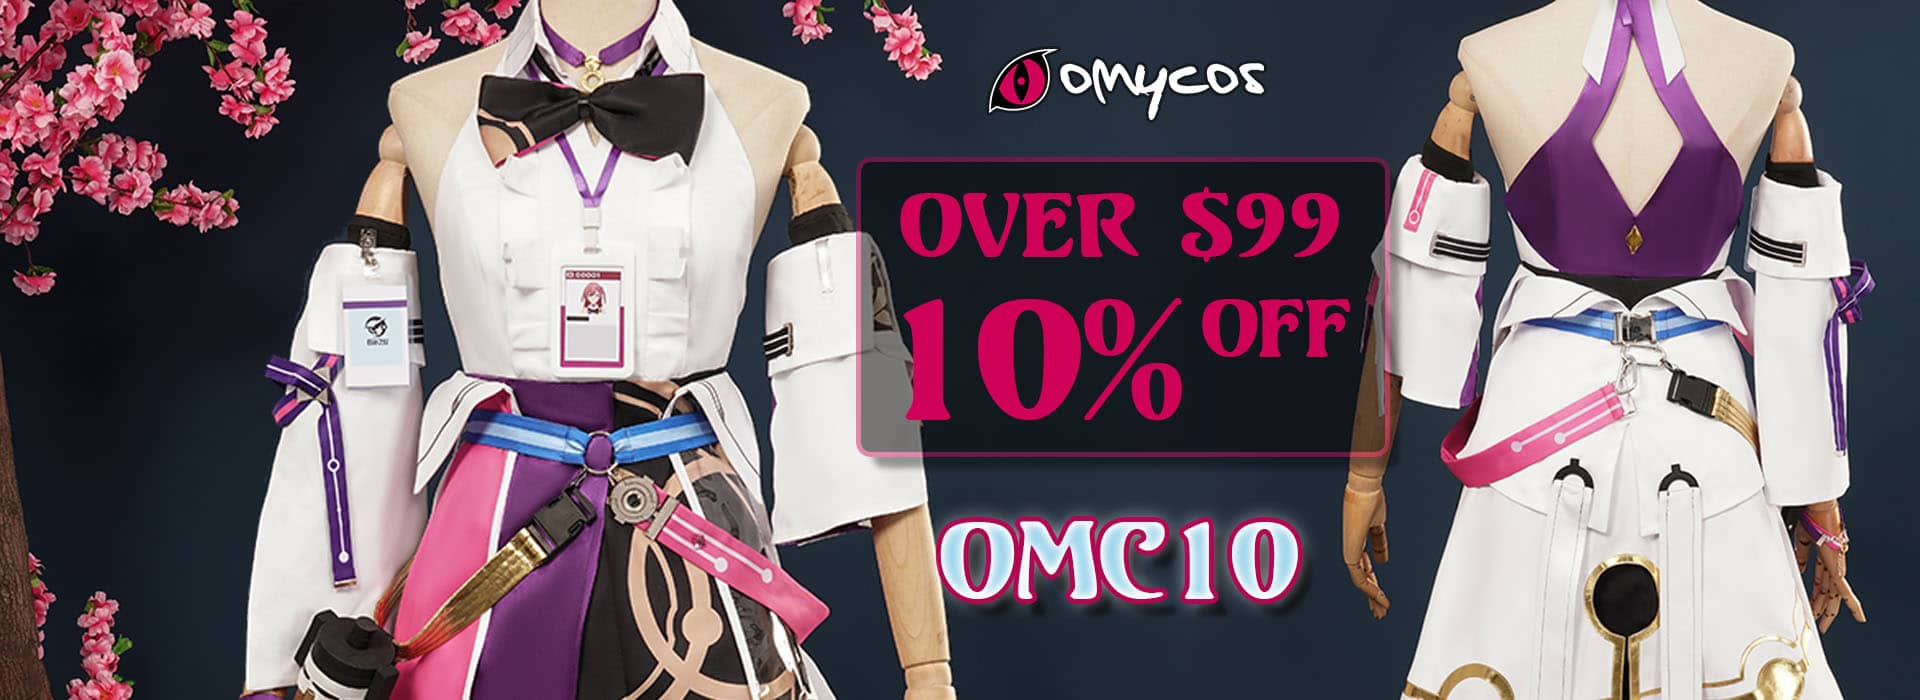 10% off on omycos.com